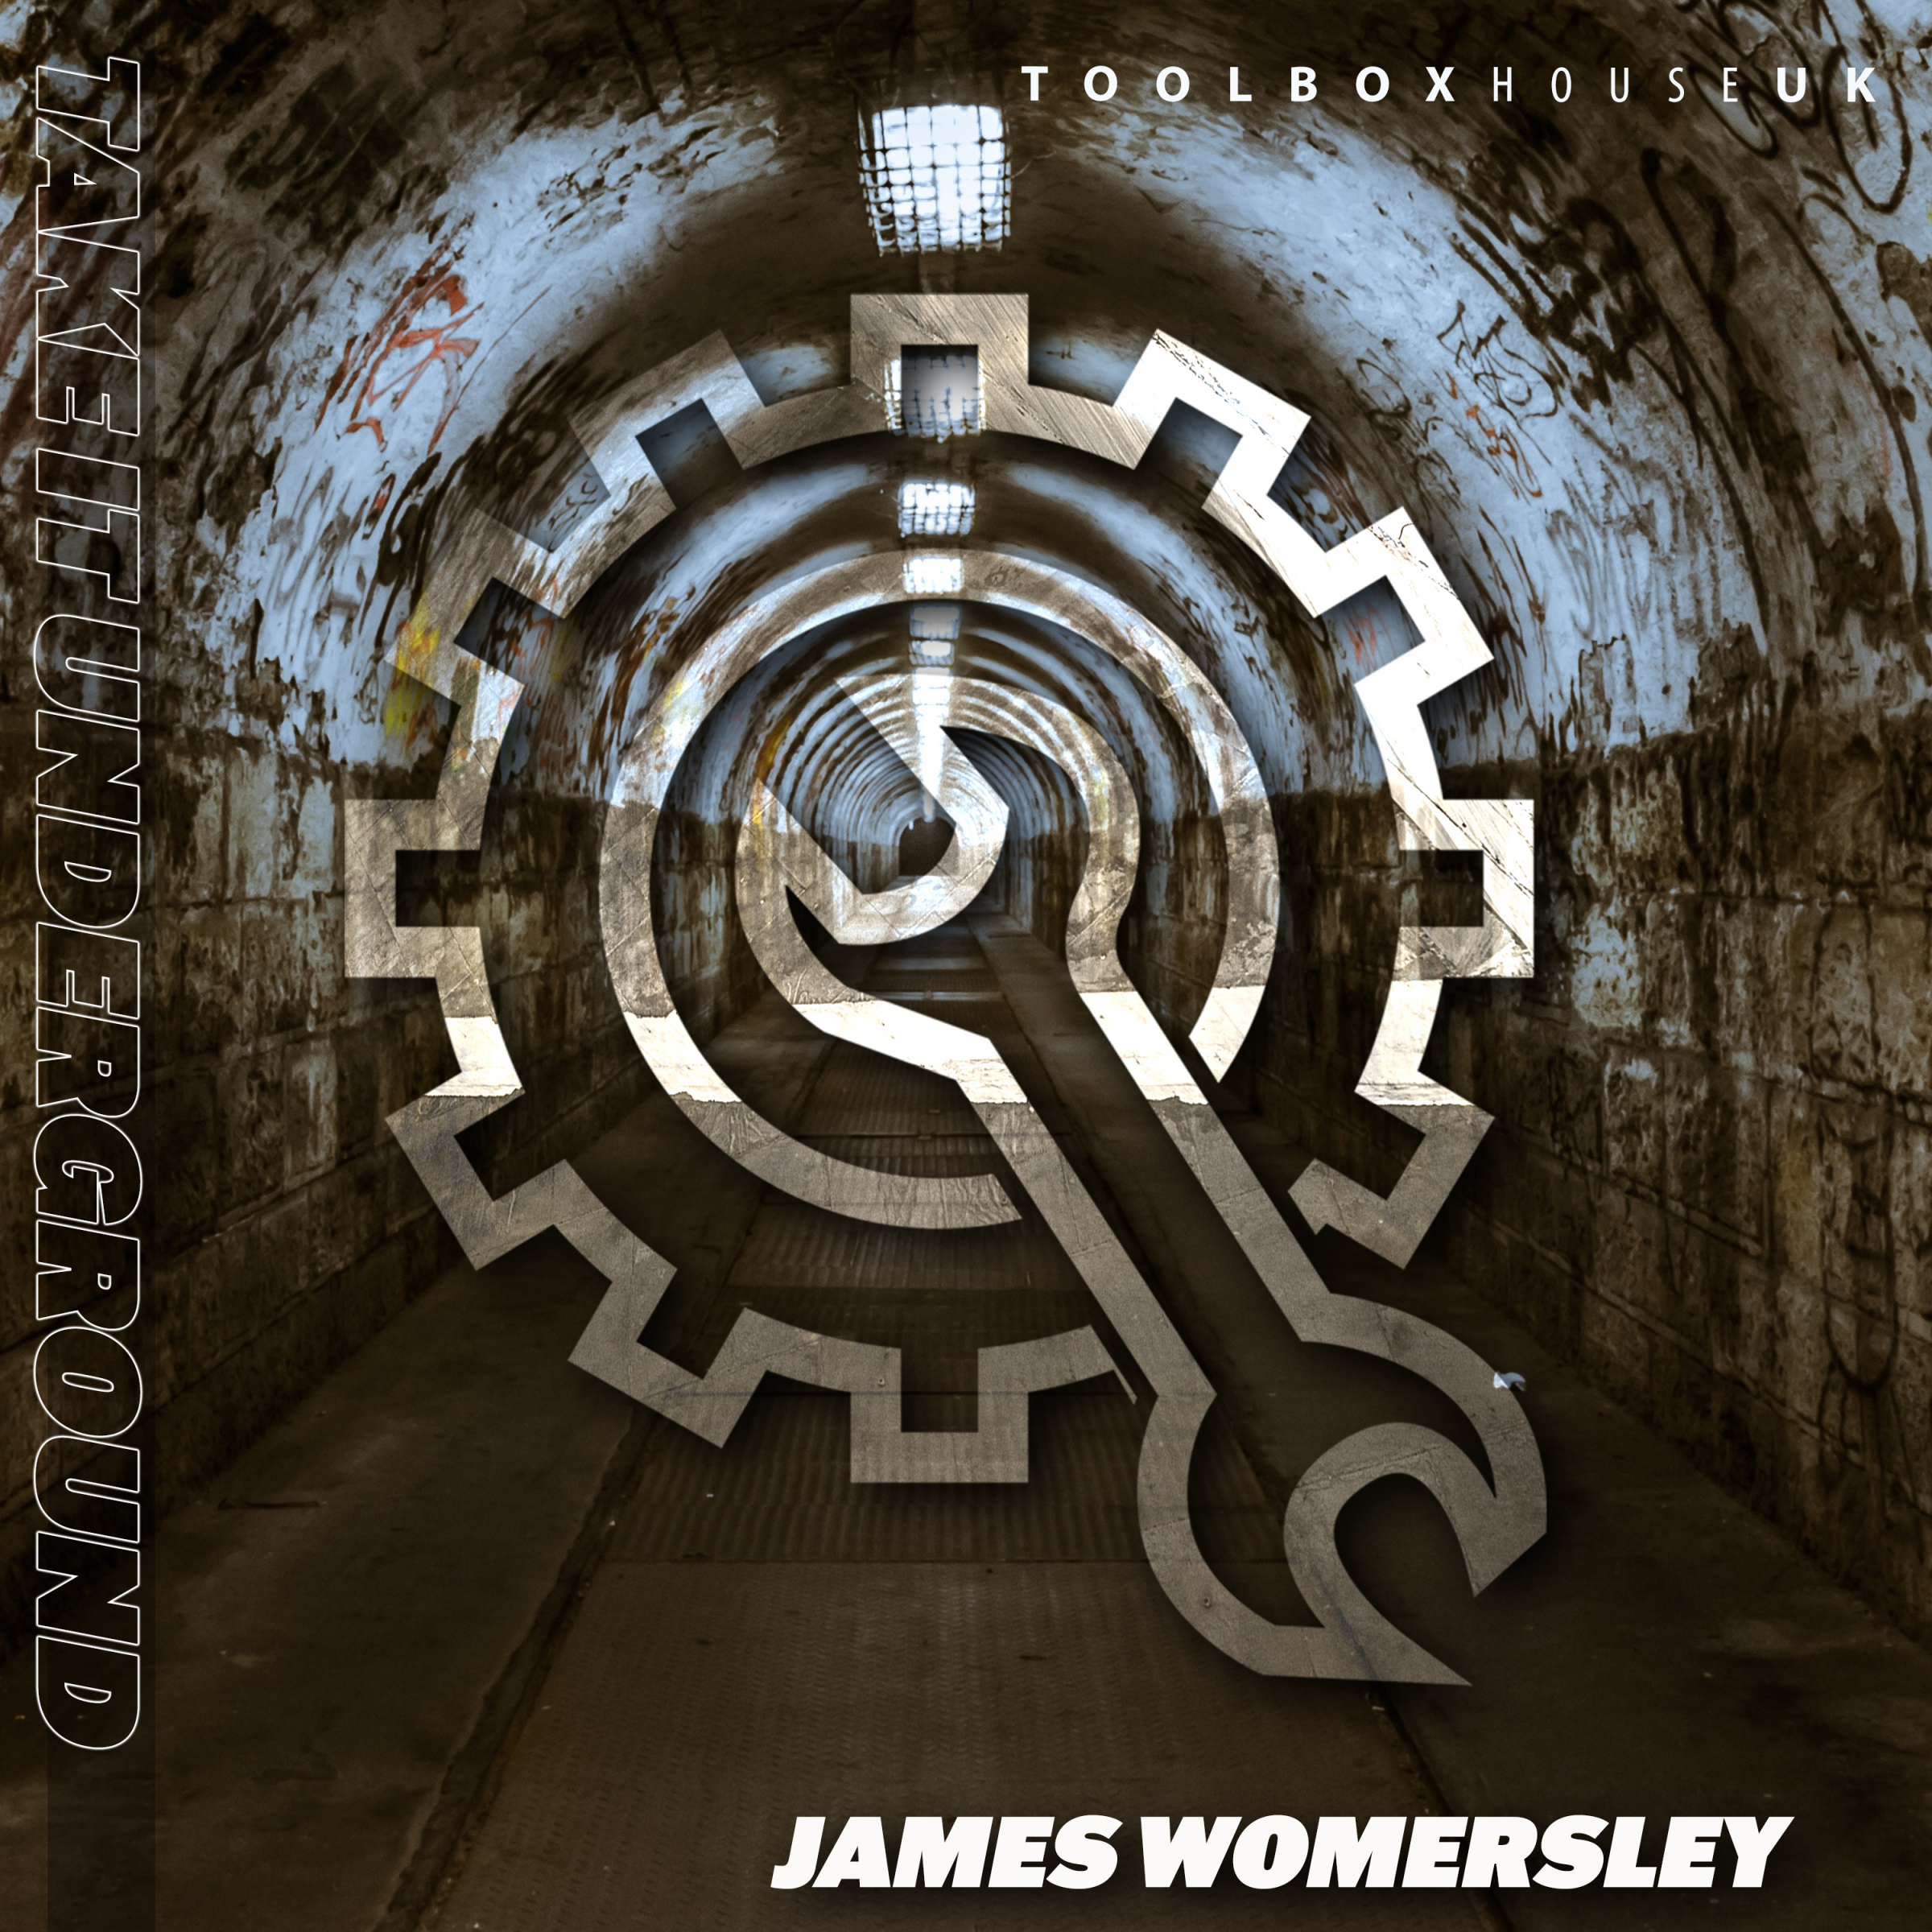 Take the Underground. James flac